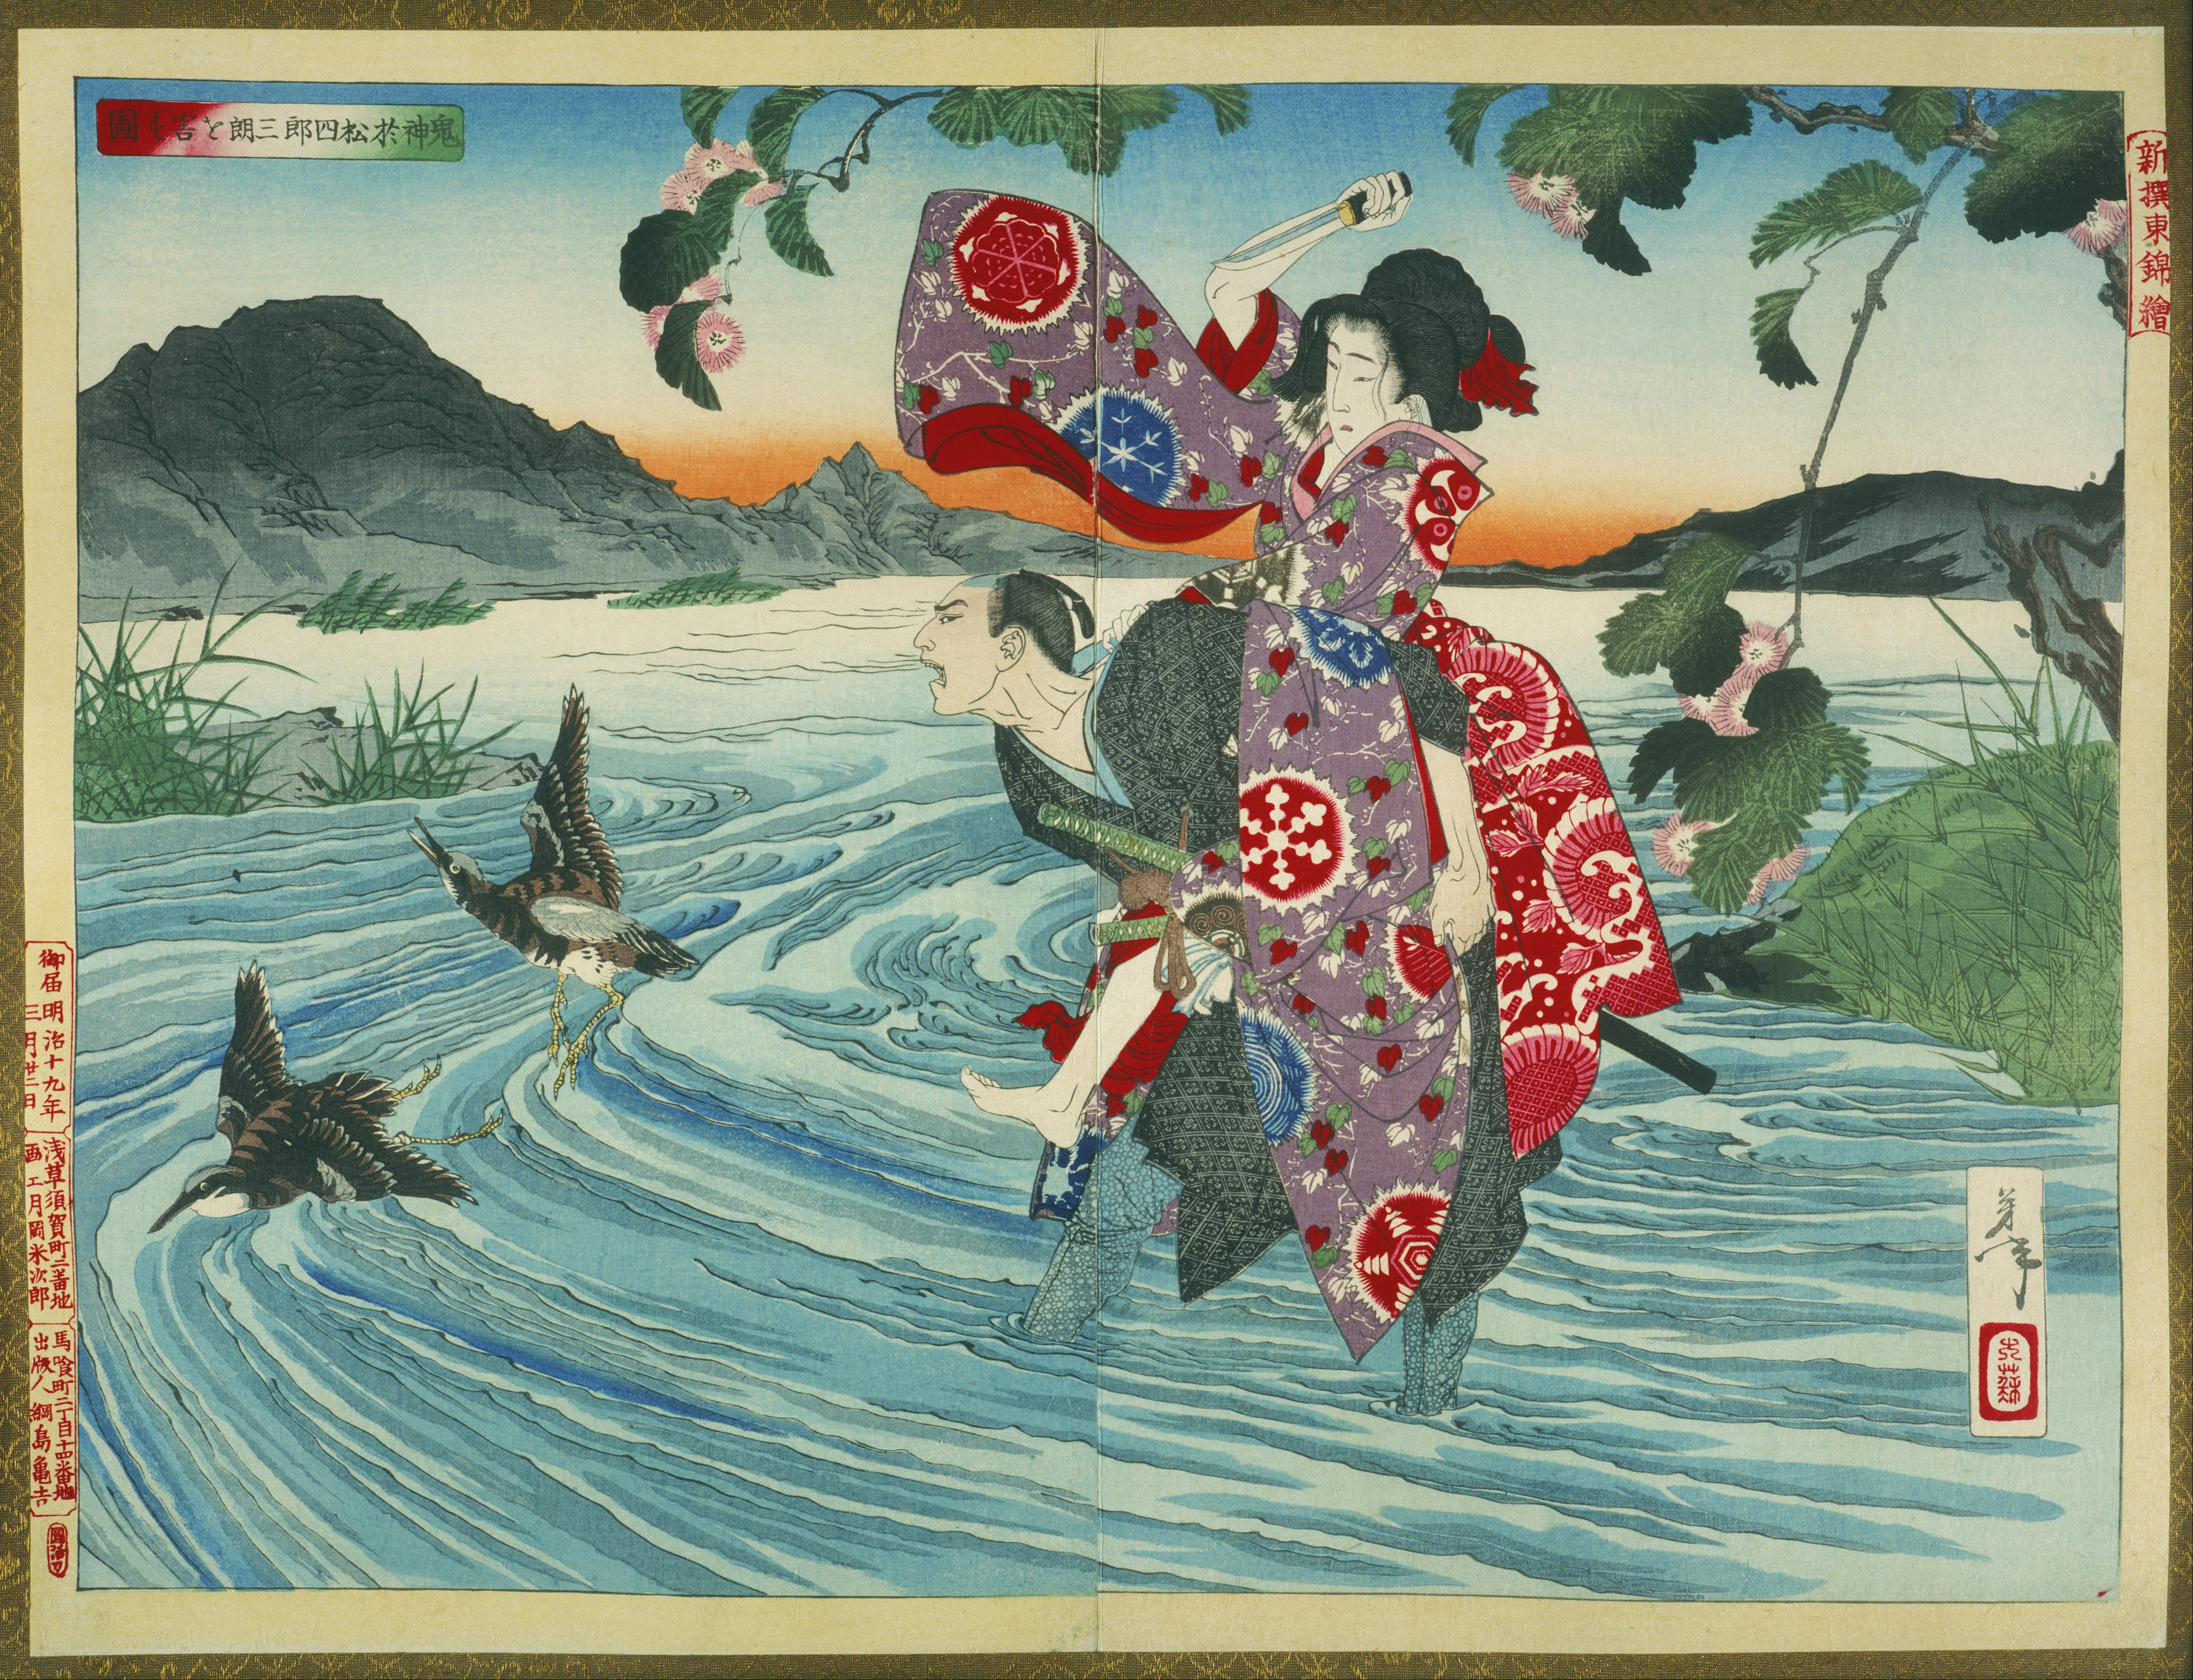 Şeytan Omatsu Nehirden Geçerken Shirosaburō'yu Öldürür (orig. "The Demon Omatsu Murders Shirosaburō in the Ford") by Tsukioka Yoshitoshi - 1885 - 39.39 x 53.39 cm özel koleksiyon